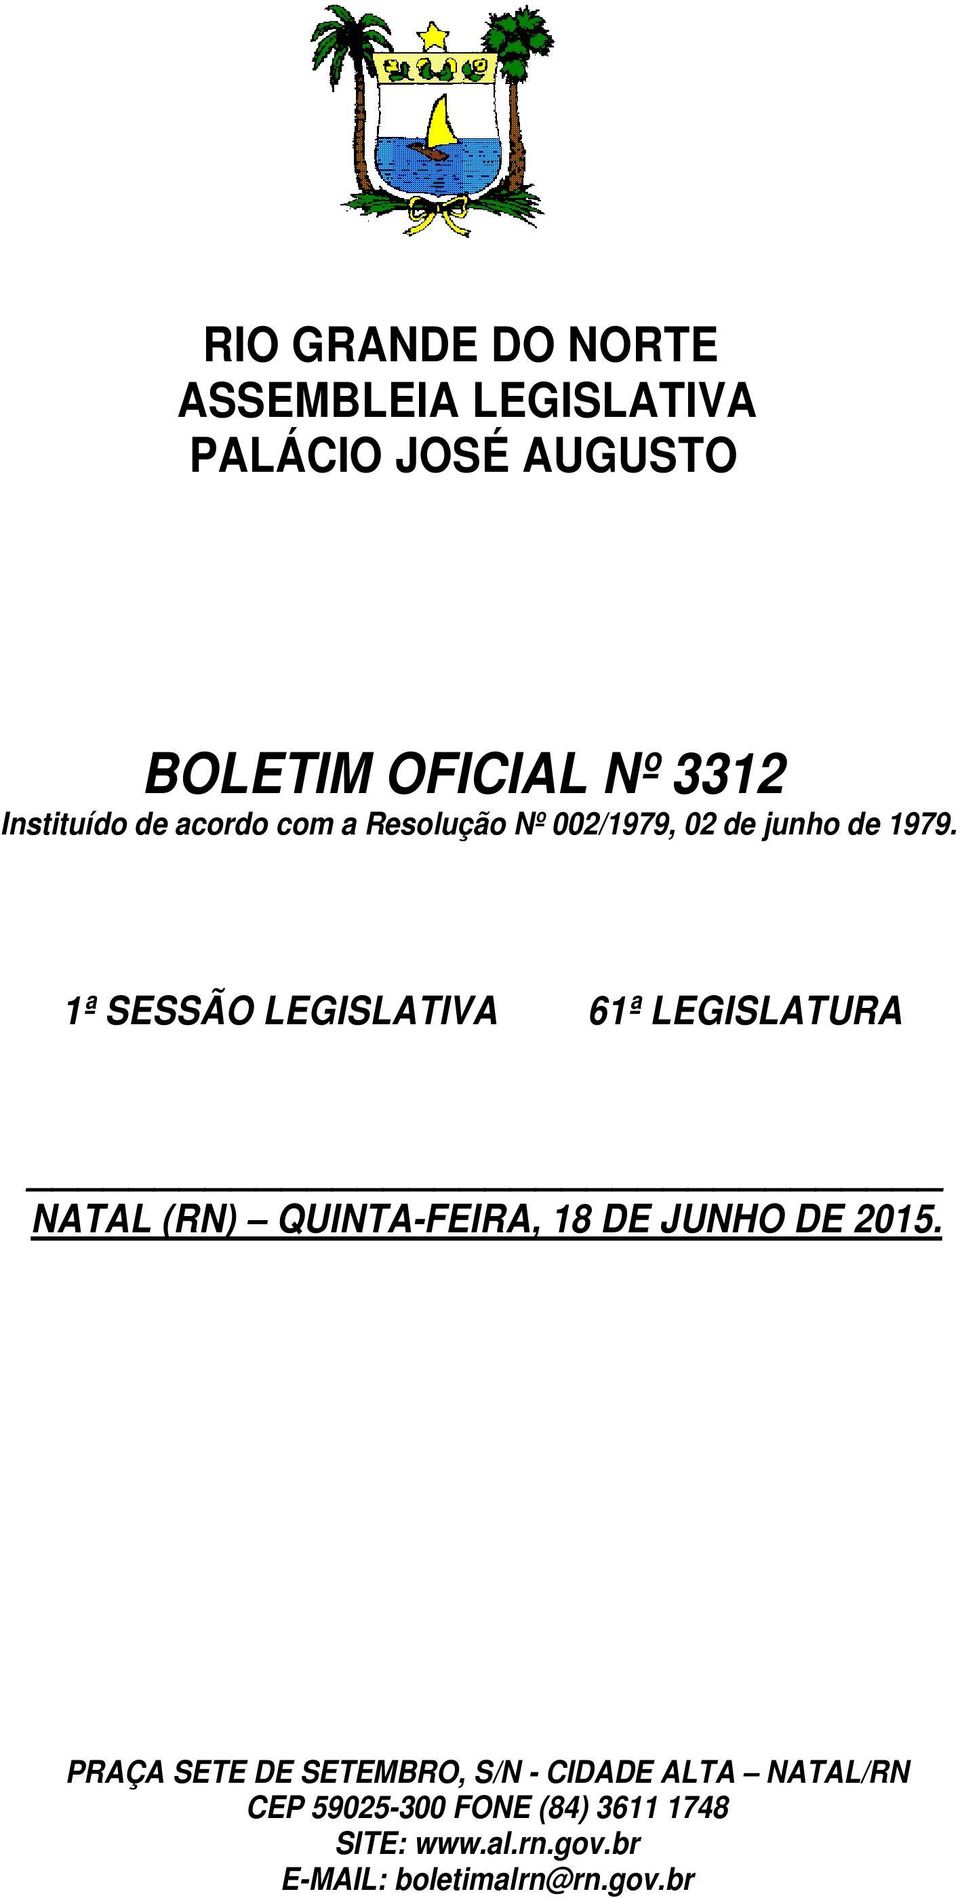 1ª SESSÃO LEGISLATIVA 61ª LEGISLATURA NATAL (RN) QUINTA-FEIRA, 18 DE JUNHO DE 2015.